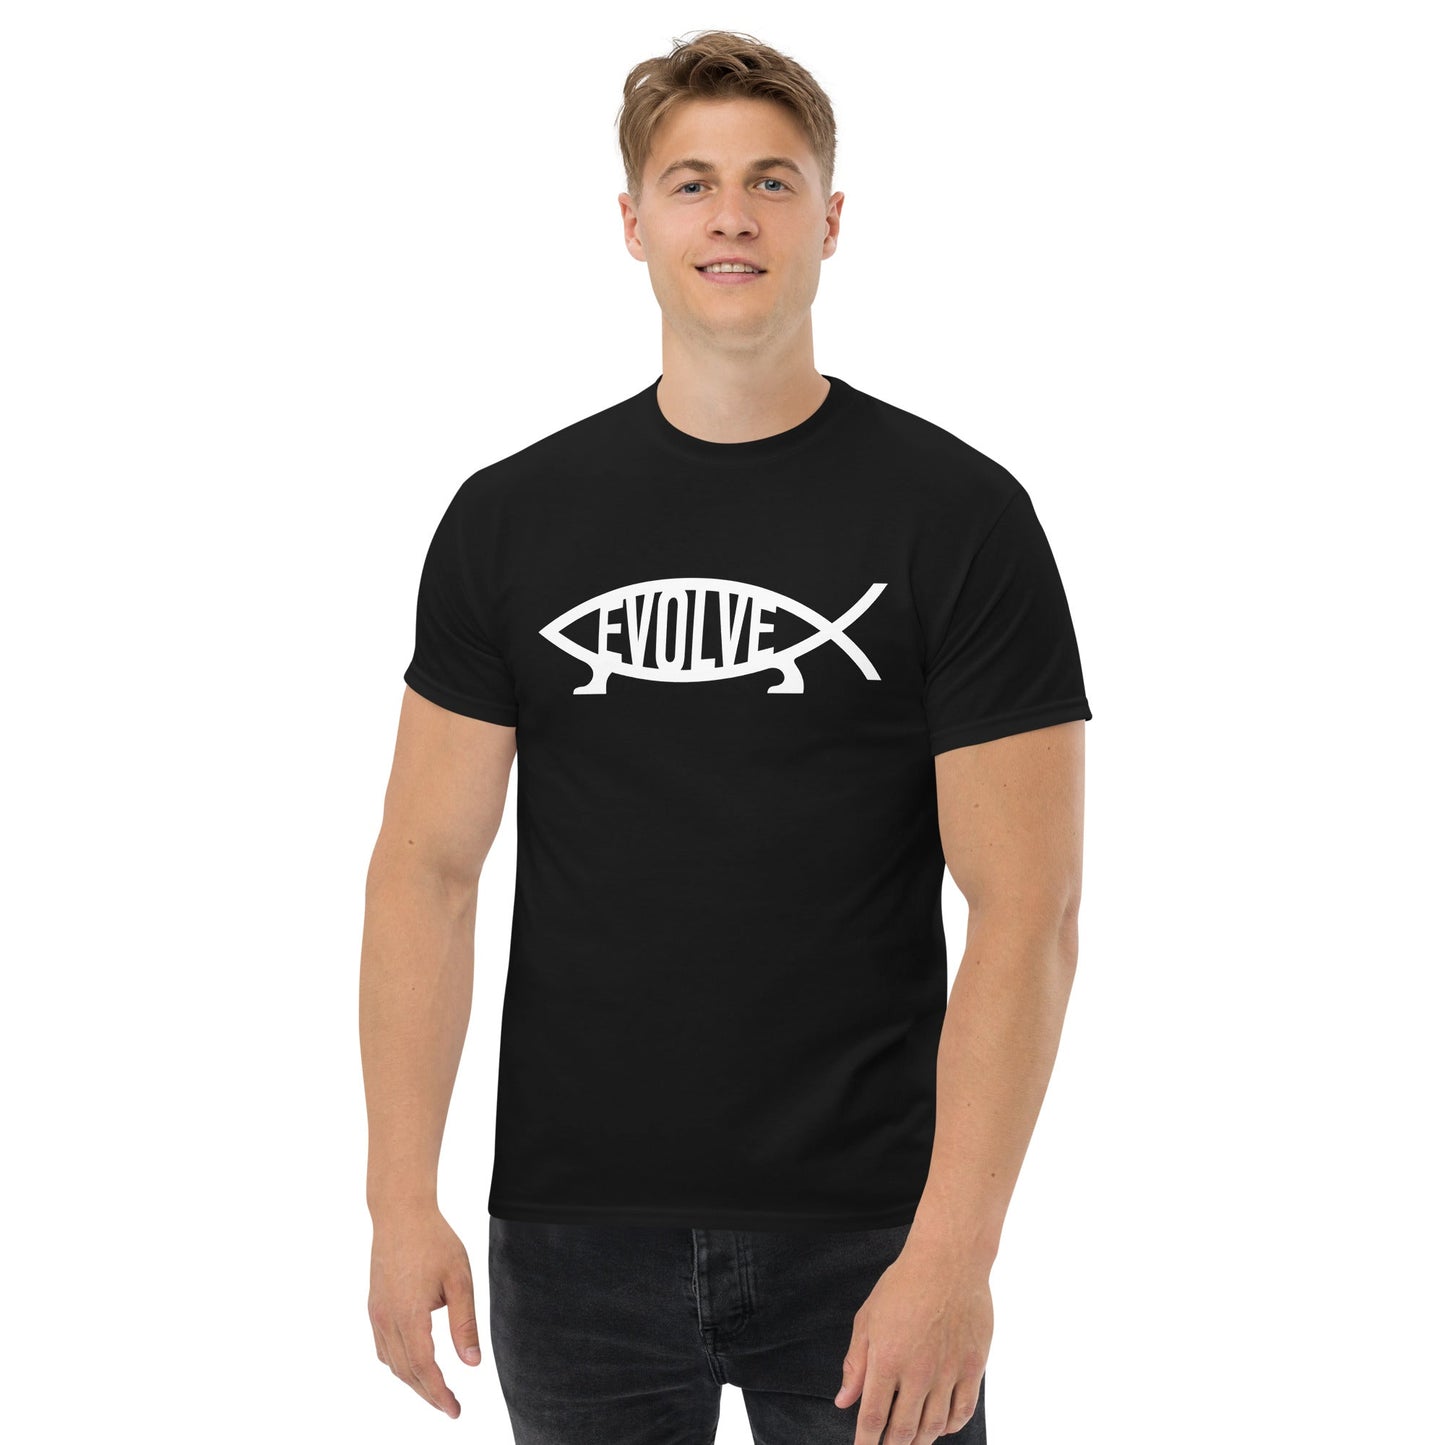 Darwin - Evolve - Plus-Sized T-Shirt